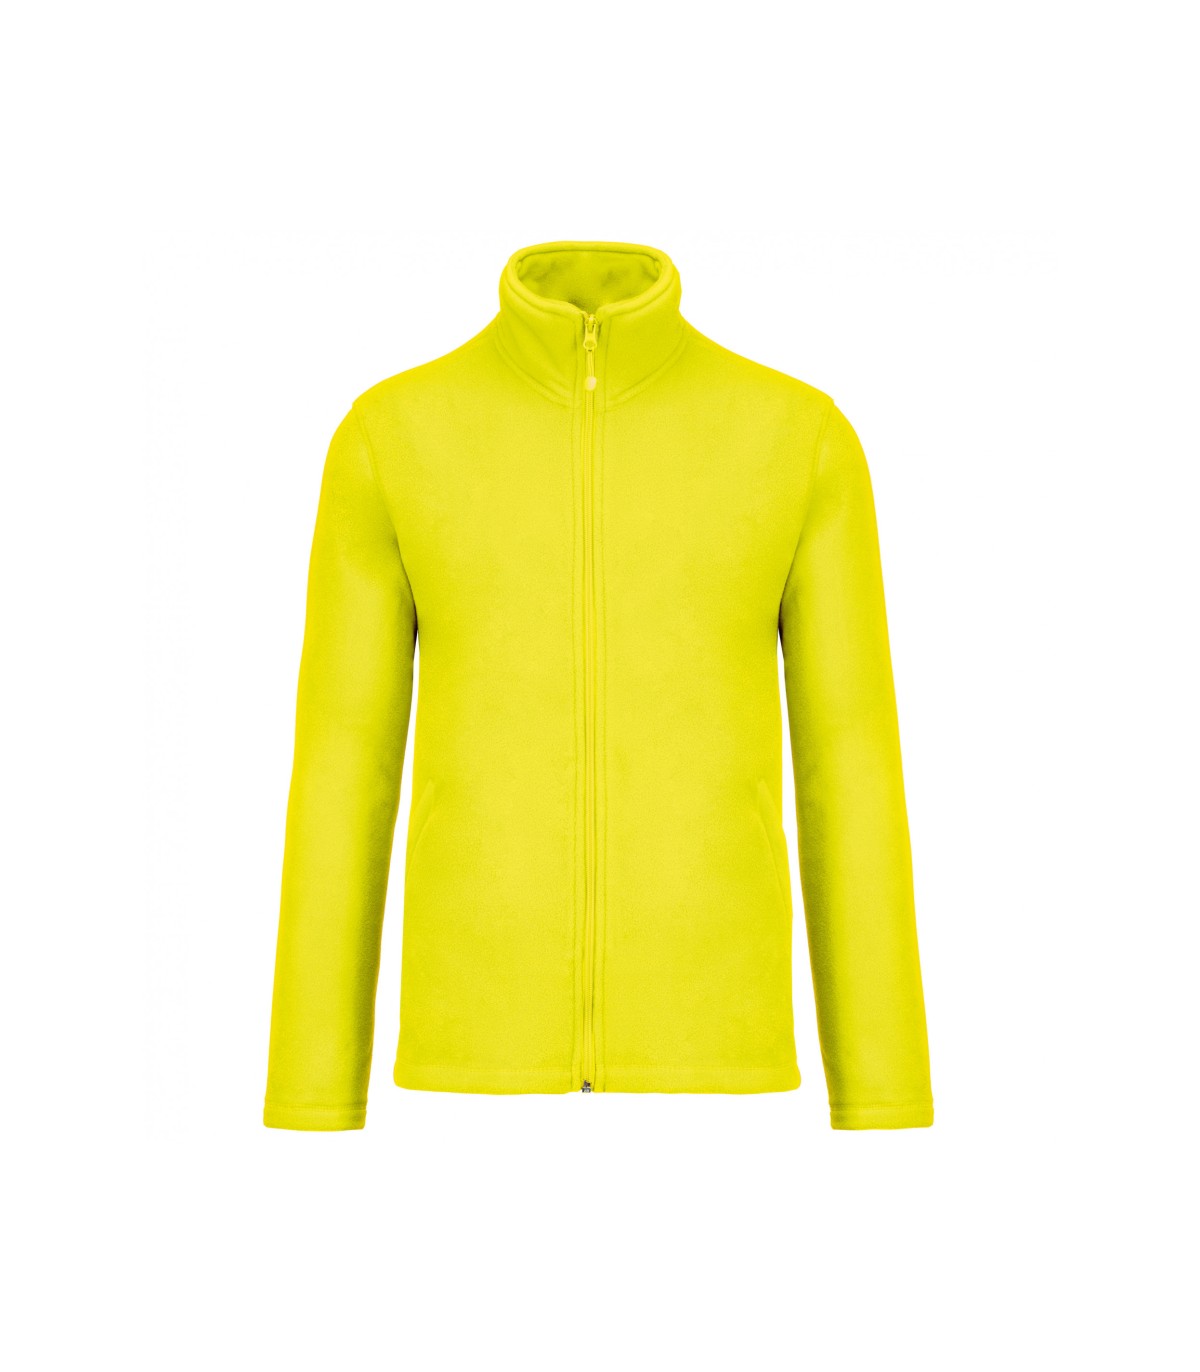 Full zip microfleece jacket yellow fluo